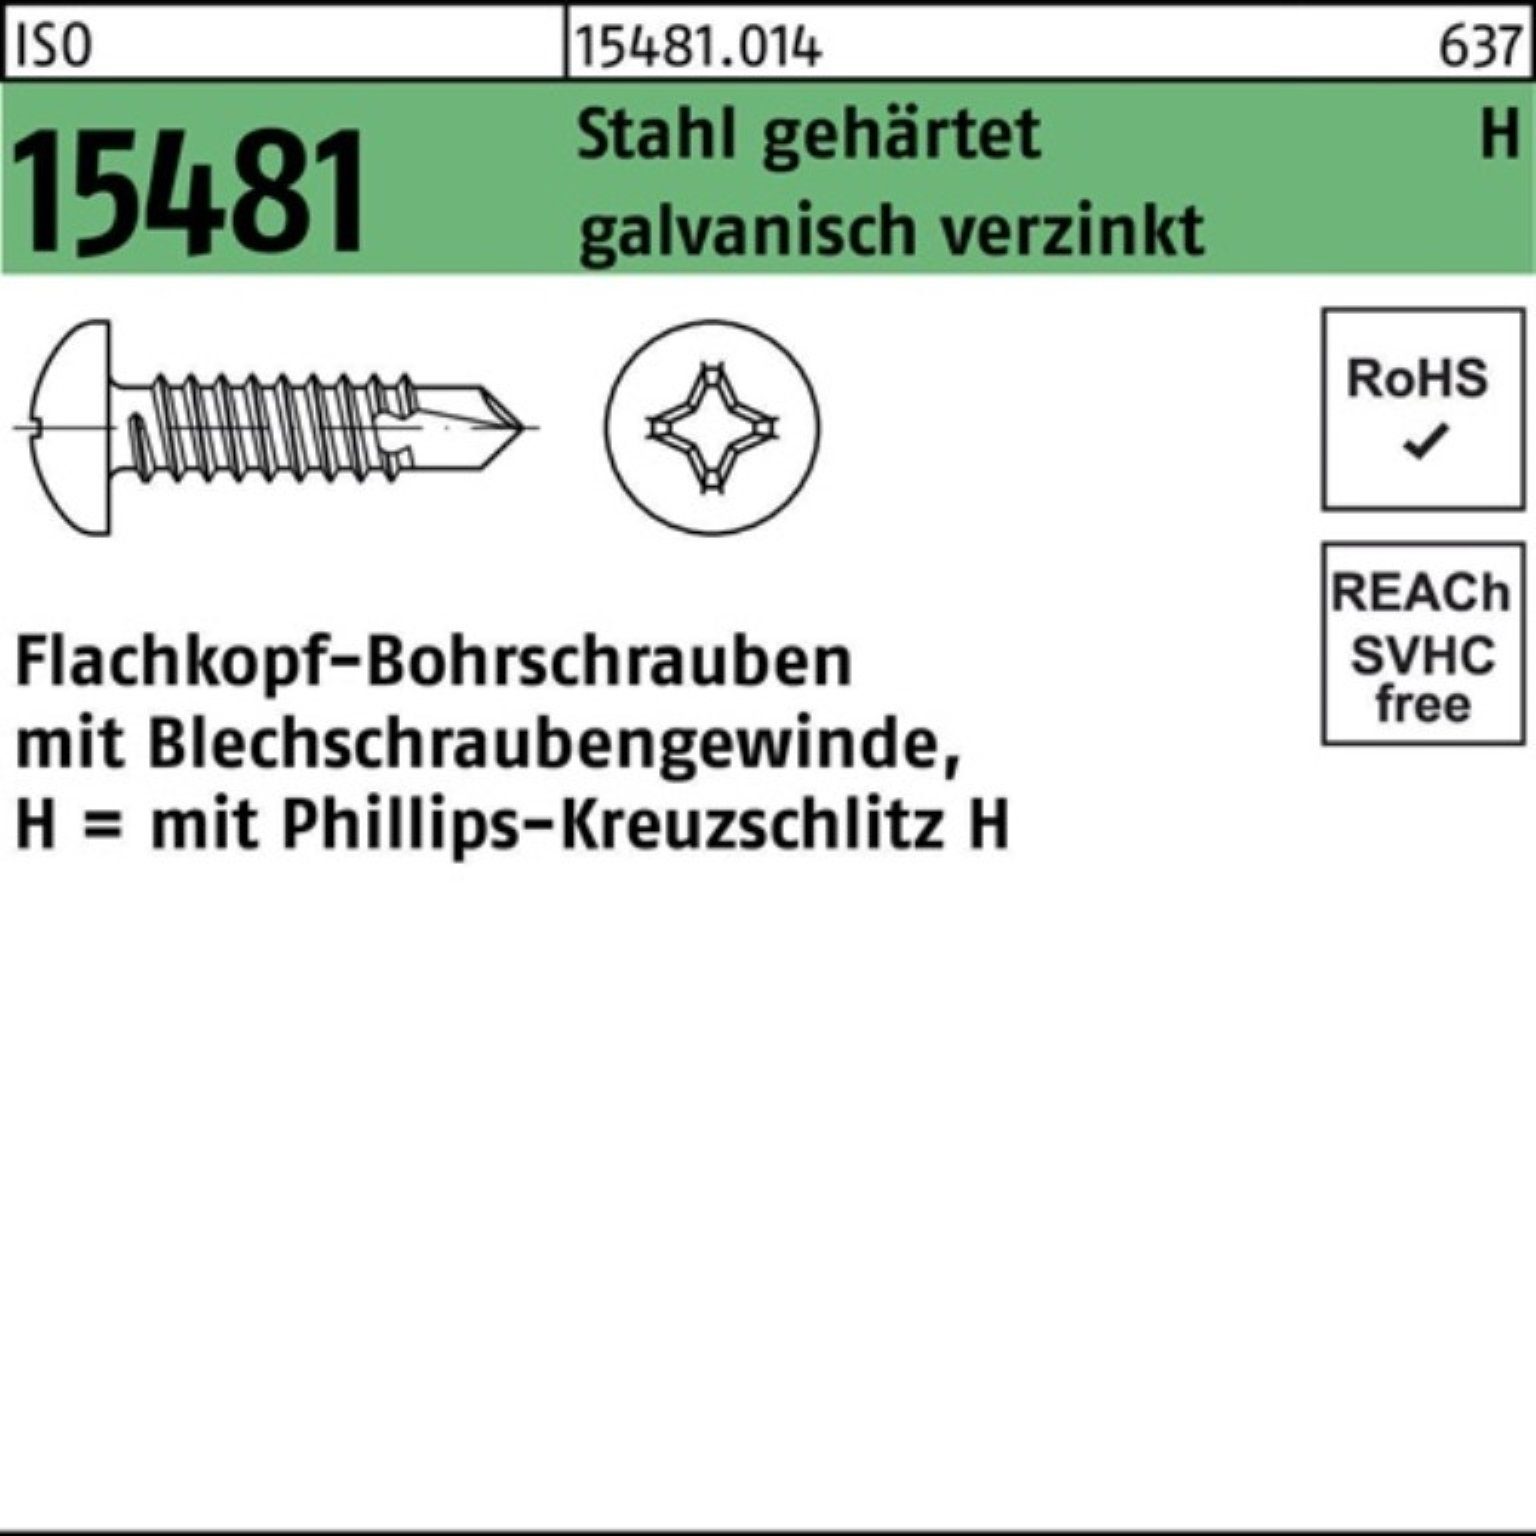 gehärtet Pack Bohrschraube 15481 ST PH ISO Stahl 500er 5,5x25-H Reyher FLAKObohrschraube